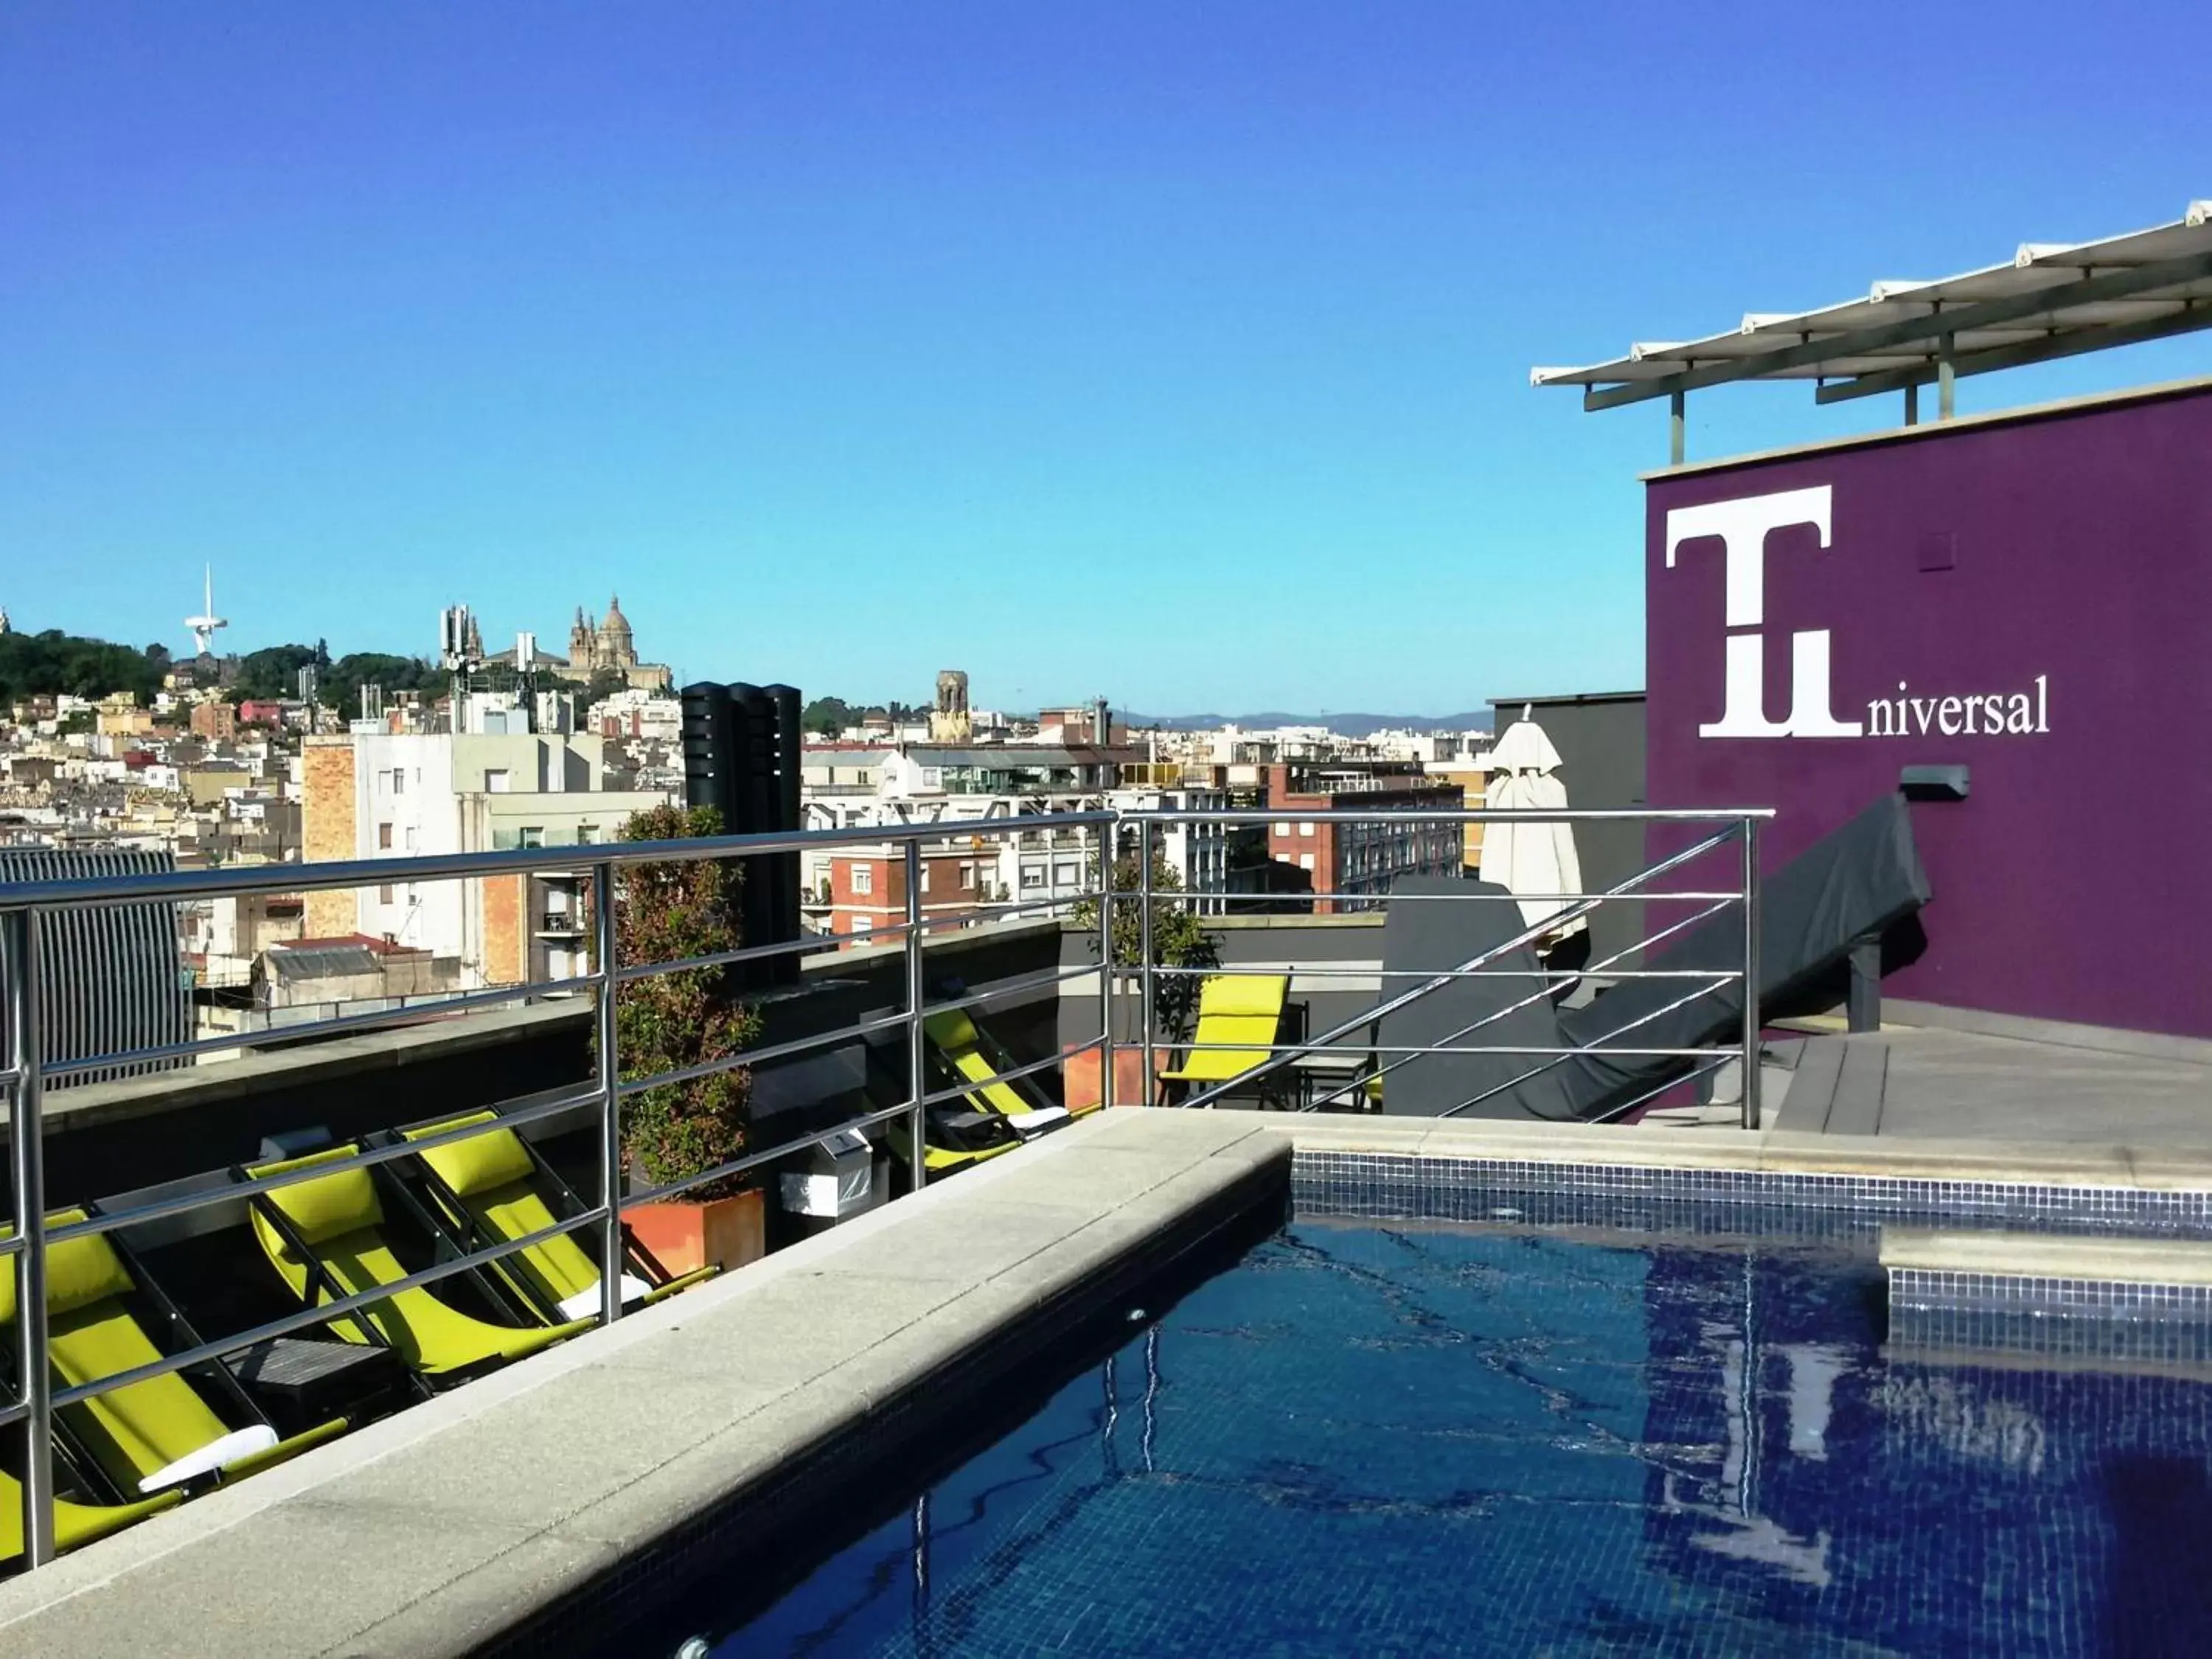 Swimming pool in Hotel Barcelona Universal